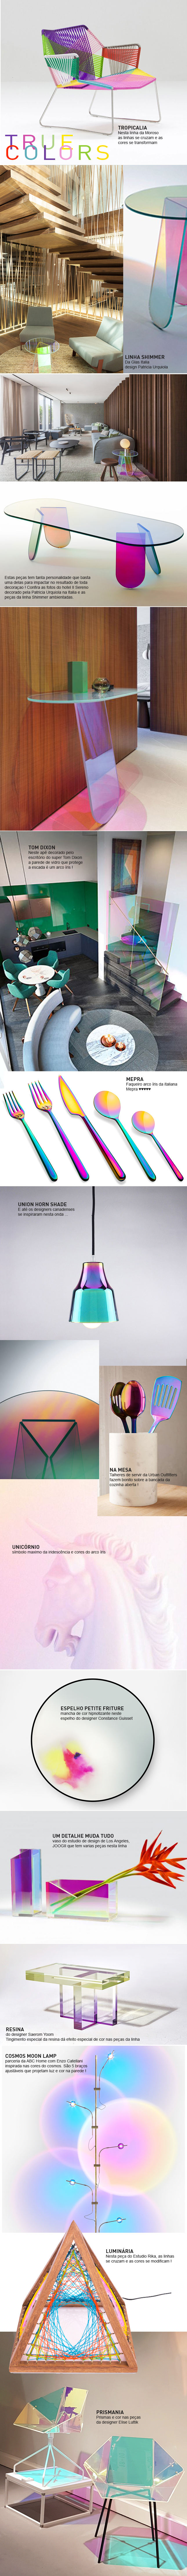 ARCO-IRIS-iridescente-decoradornet-cores-design-blog